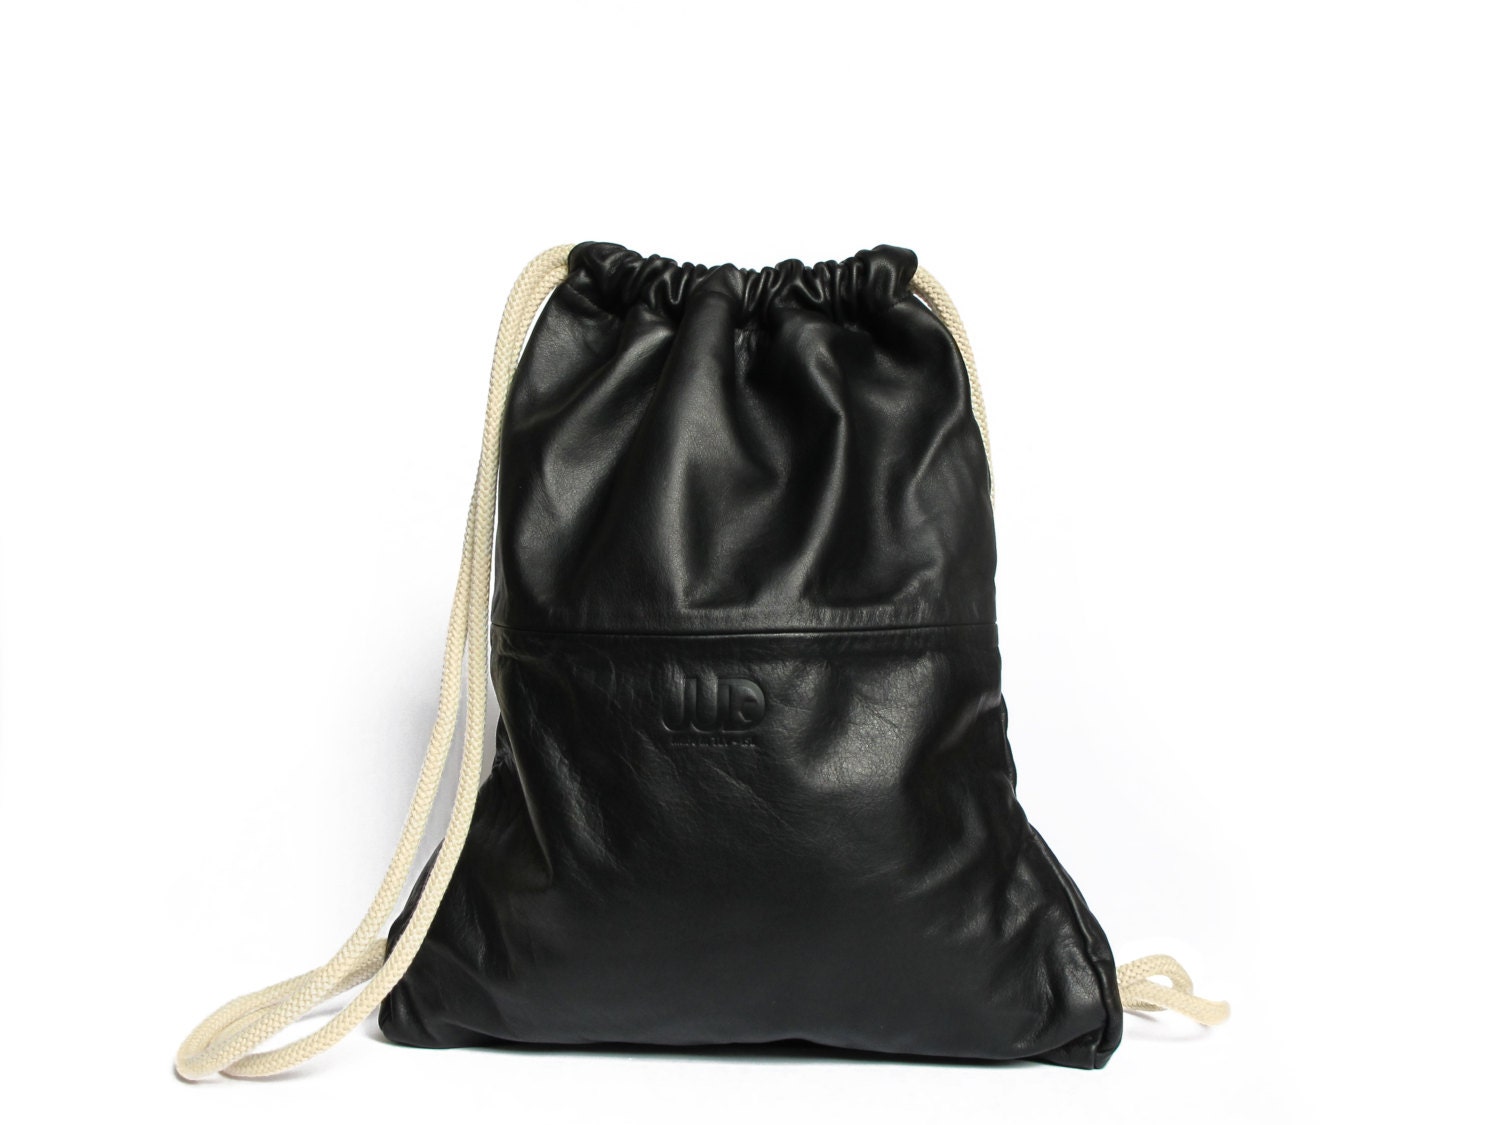 Black leather backpack purse multi leather bag SALE by JUDtlv